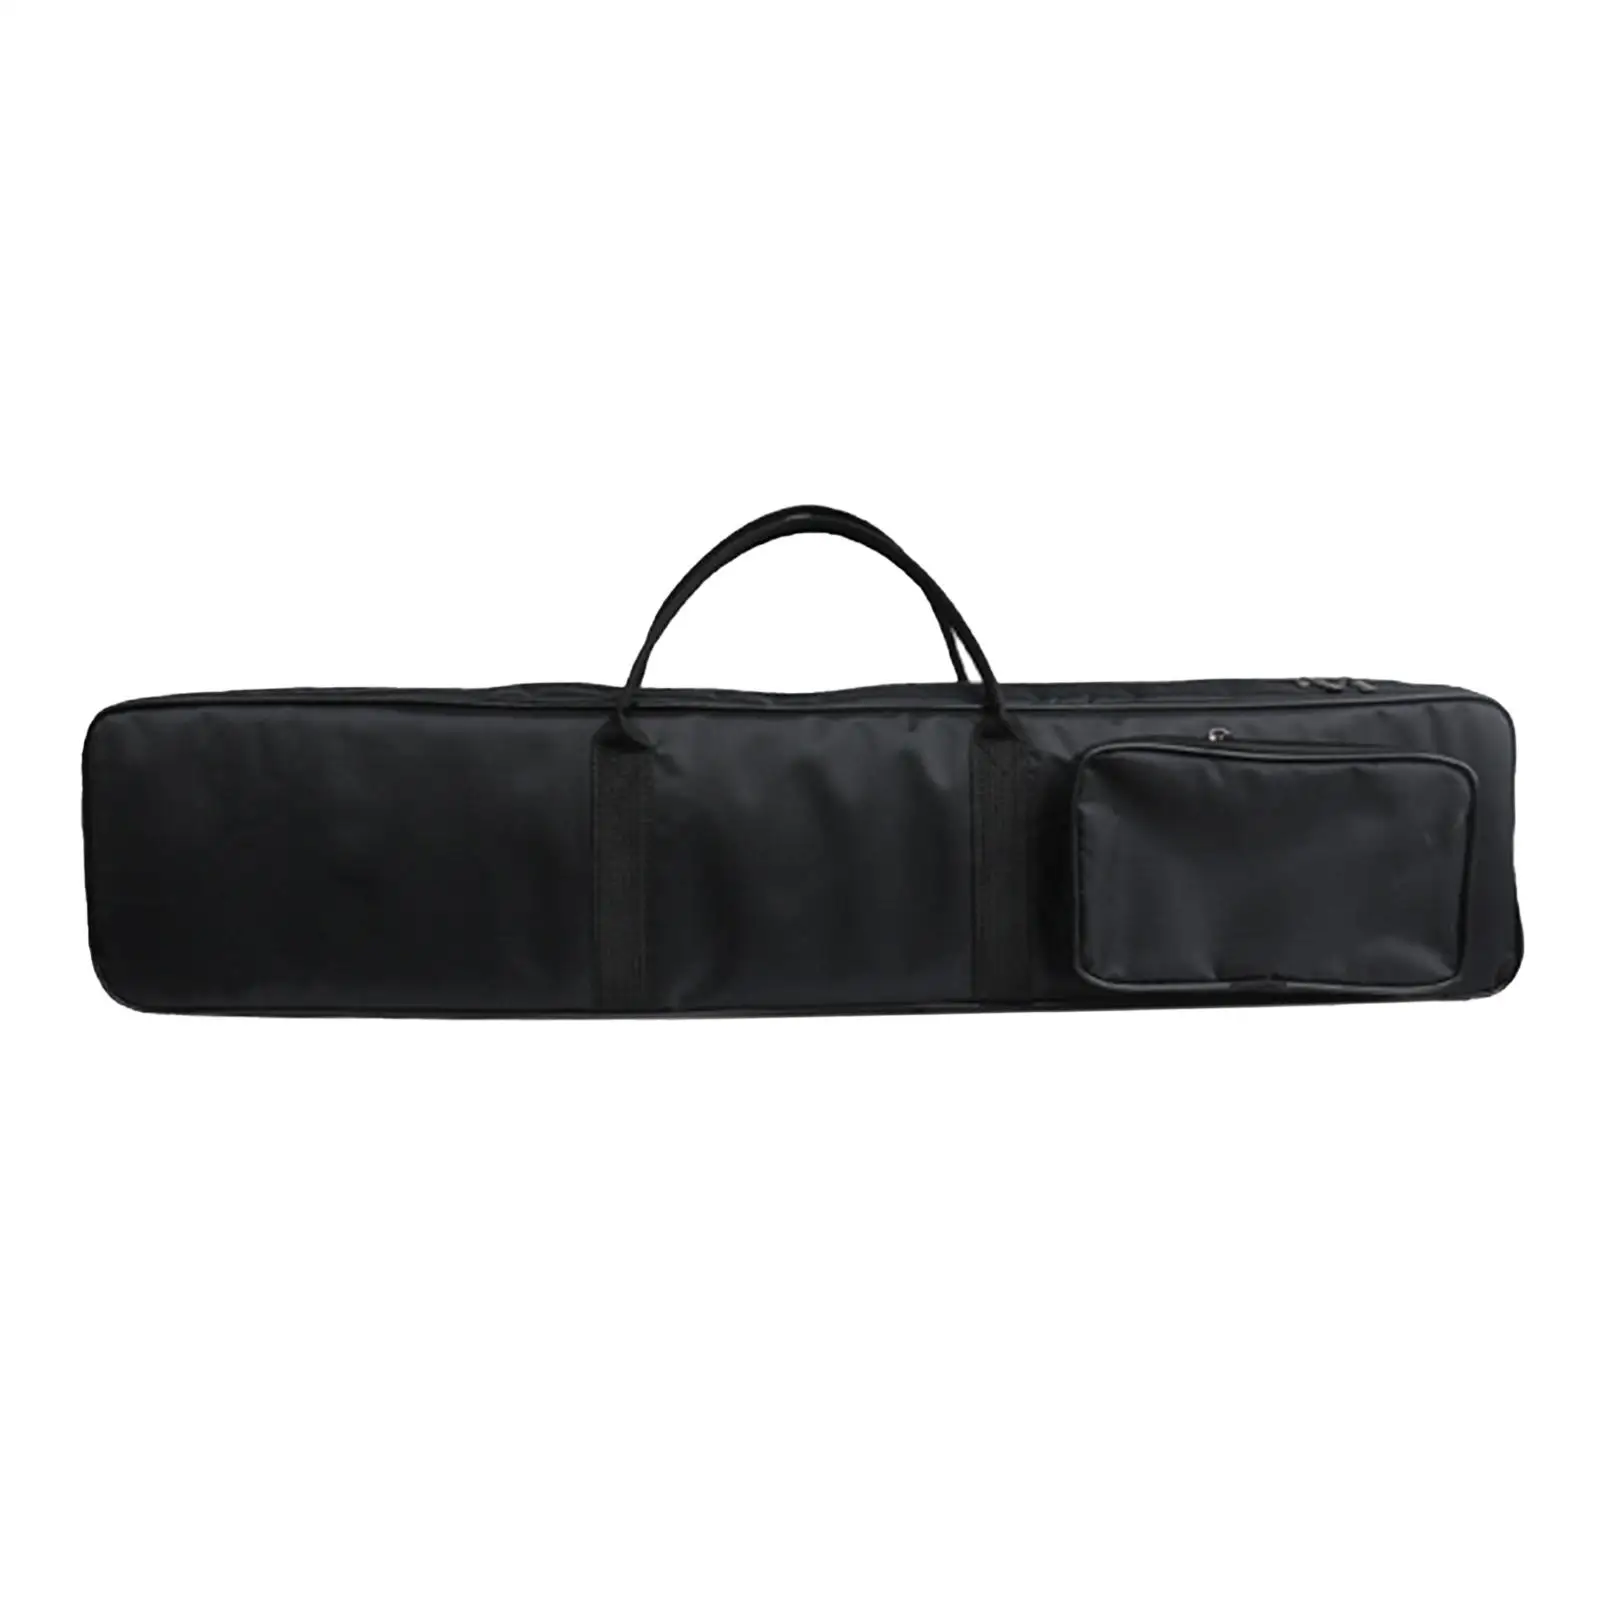 Flute Handbag with Adjustable Strap Thickened Padded Gig Bag Lightweight Flute Accessories Soft Flute Gig Bag Carrying Case Bag